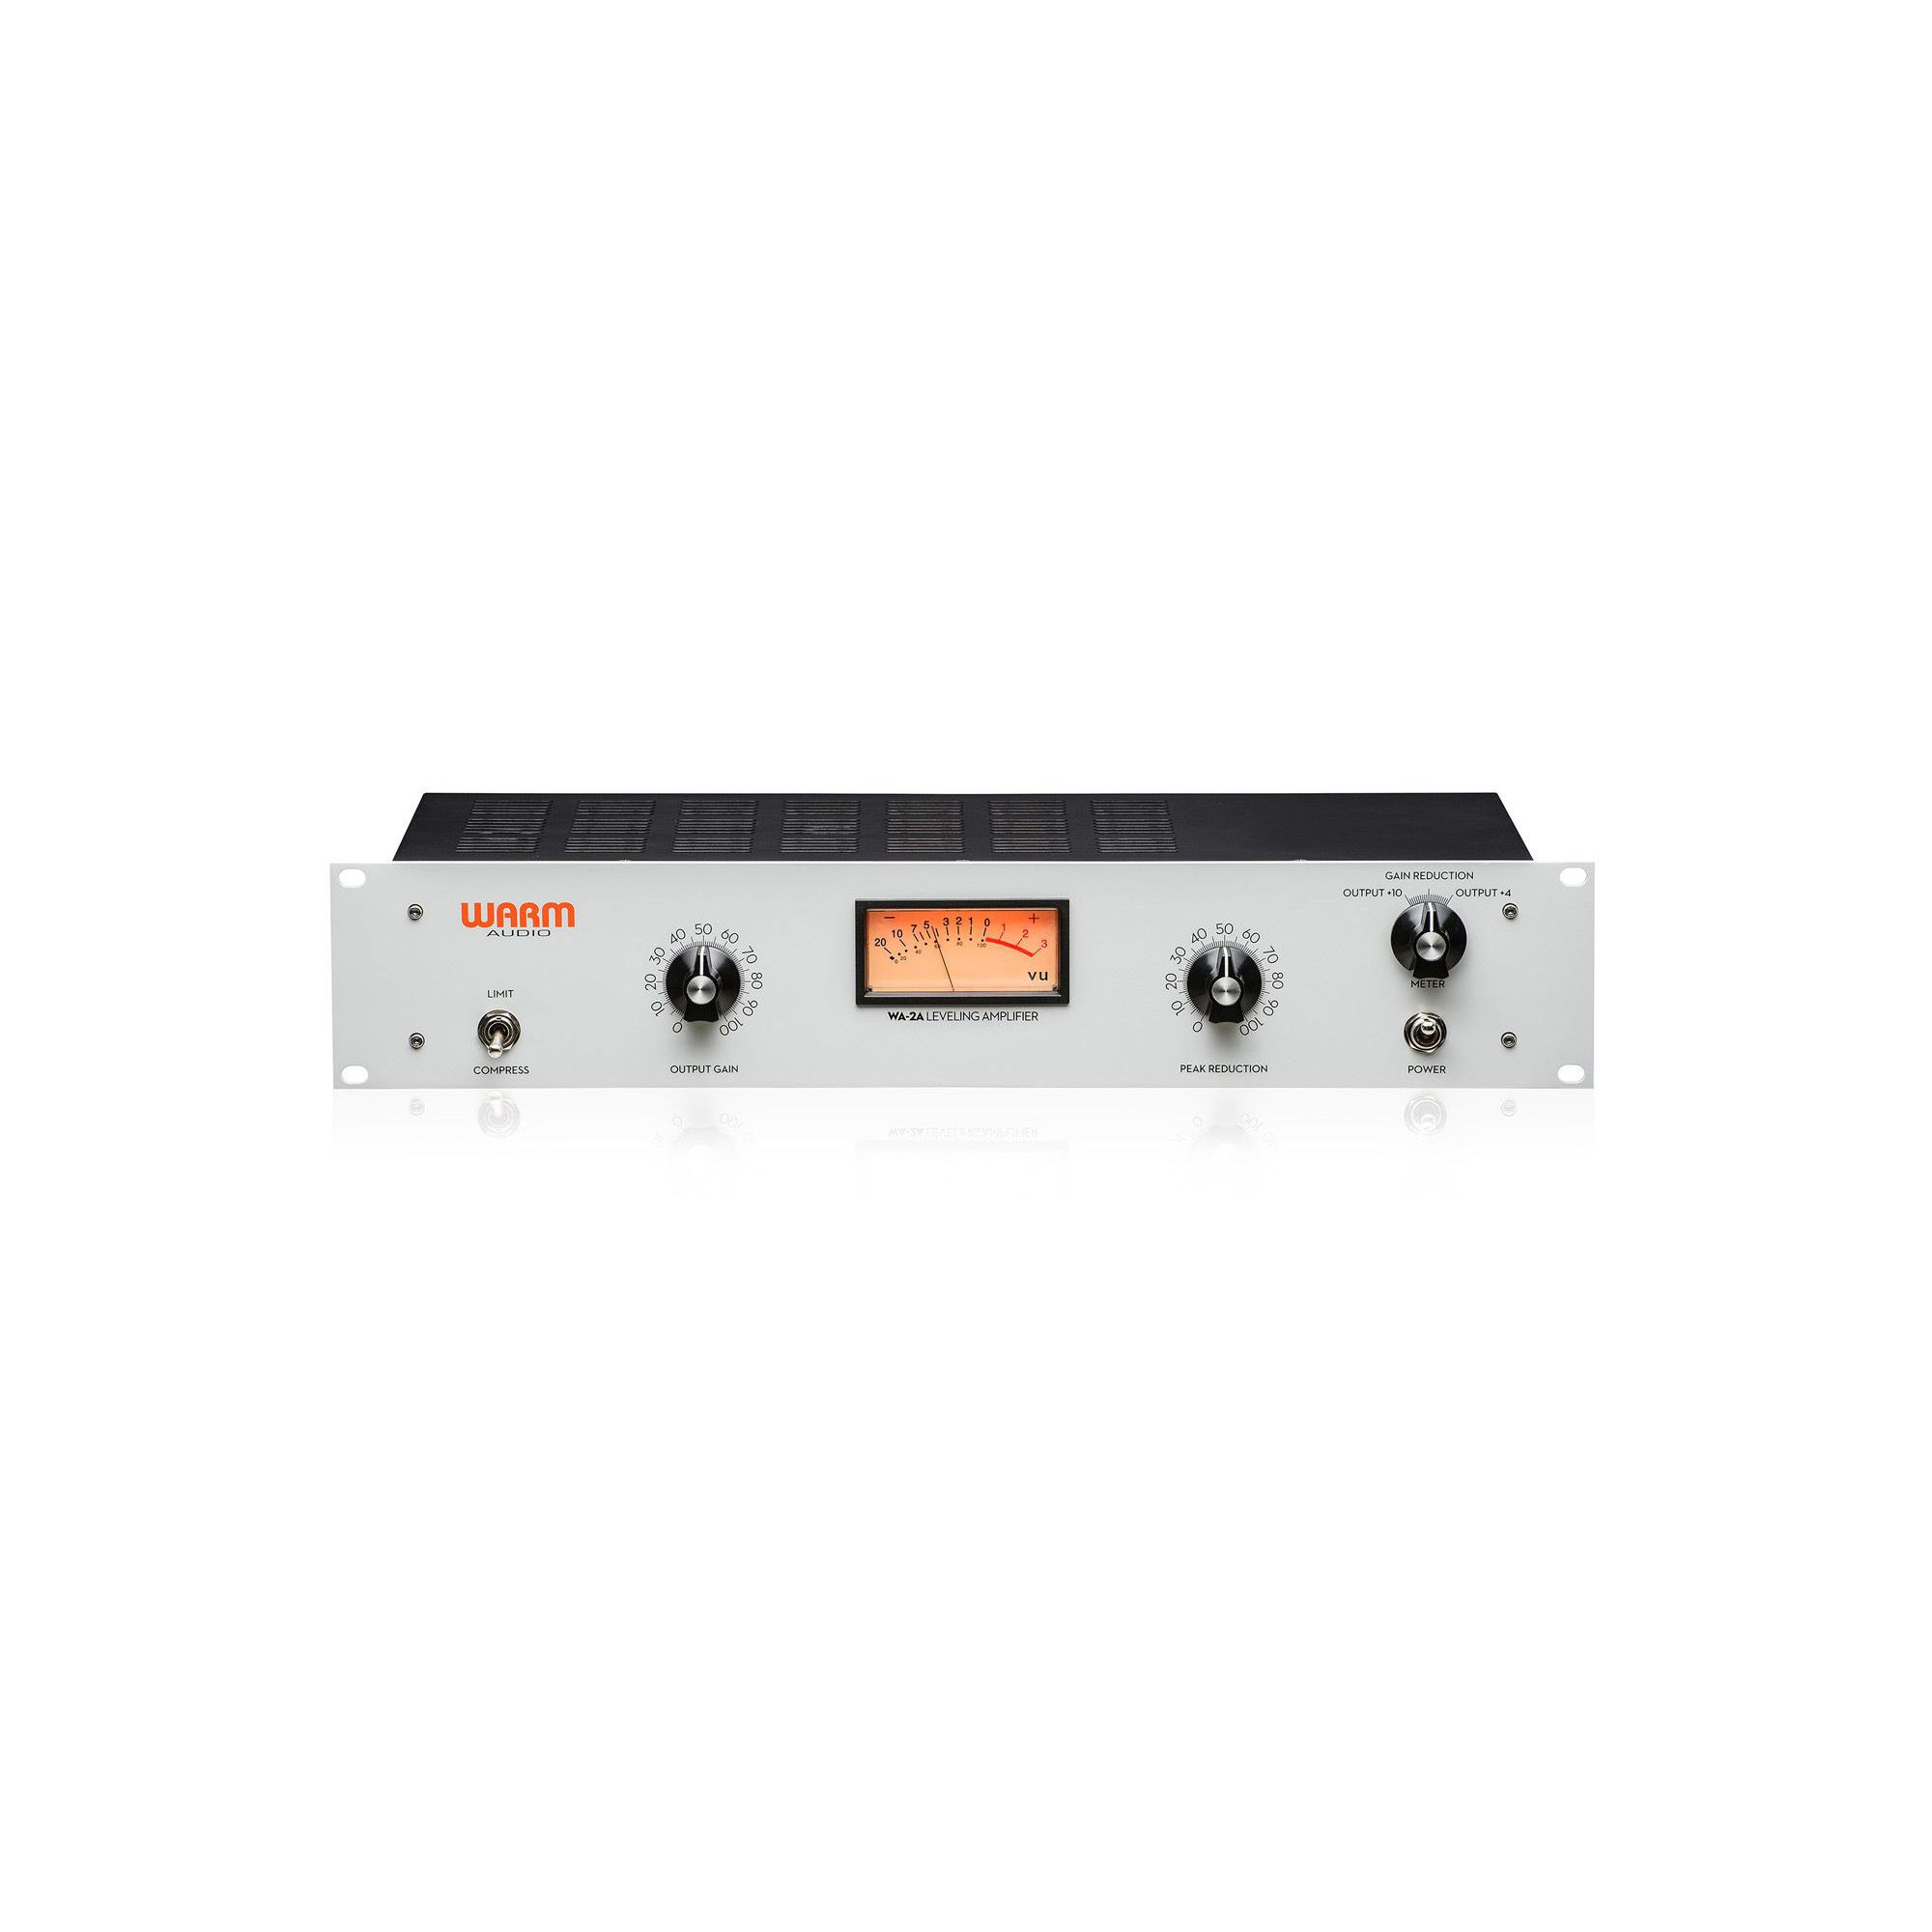 Warm Audio Wa-2a купить